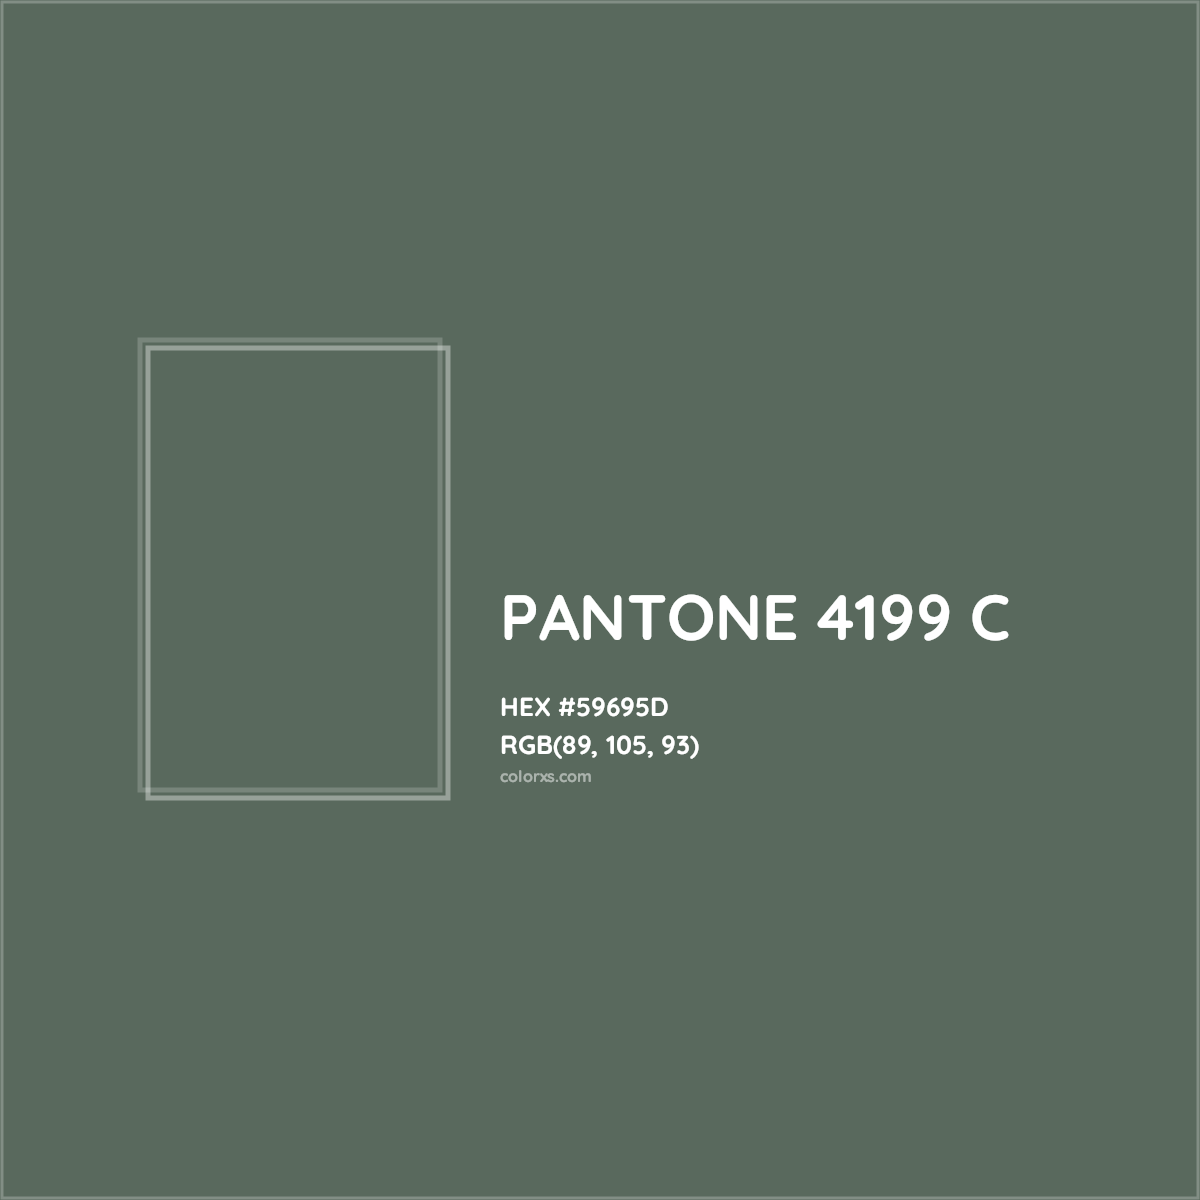 HEX #59695D PANTONE 4199 C CMS Pantone PMS - Color Code